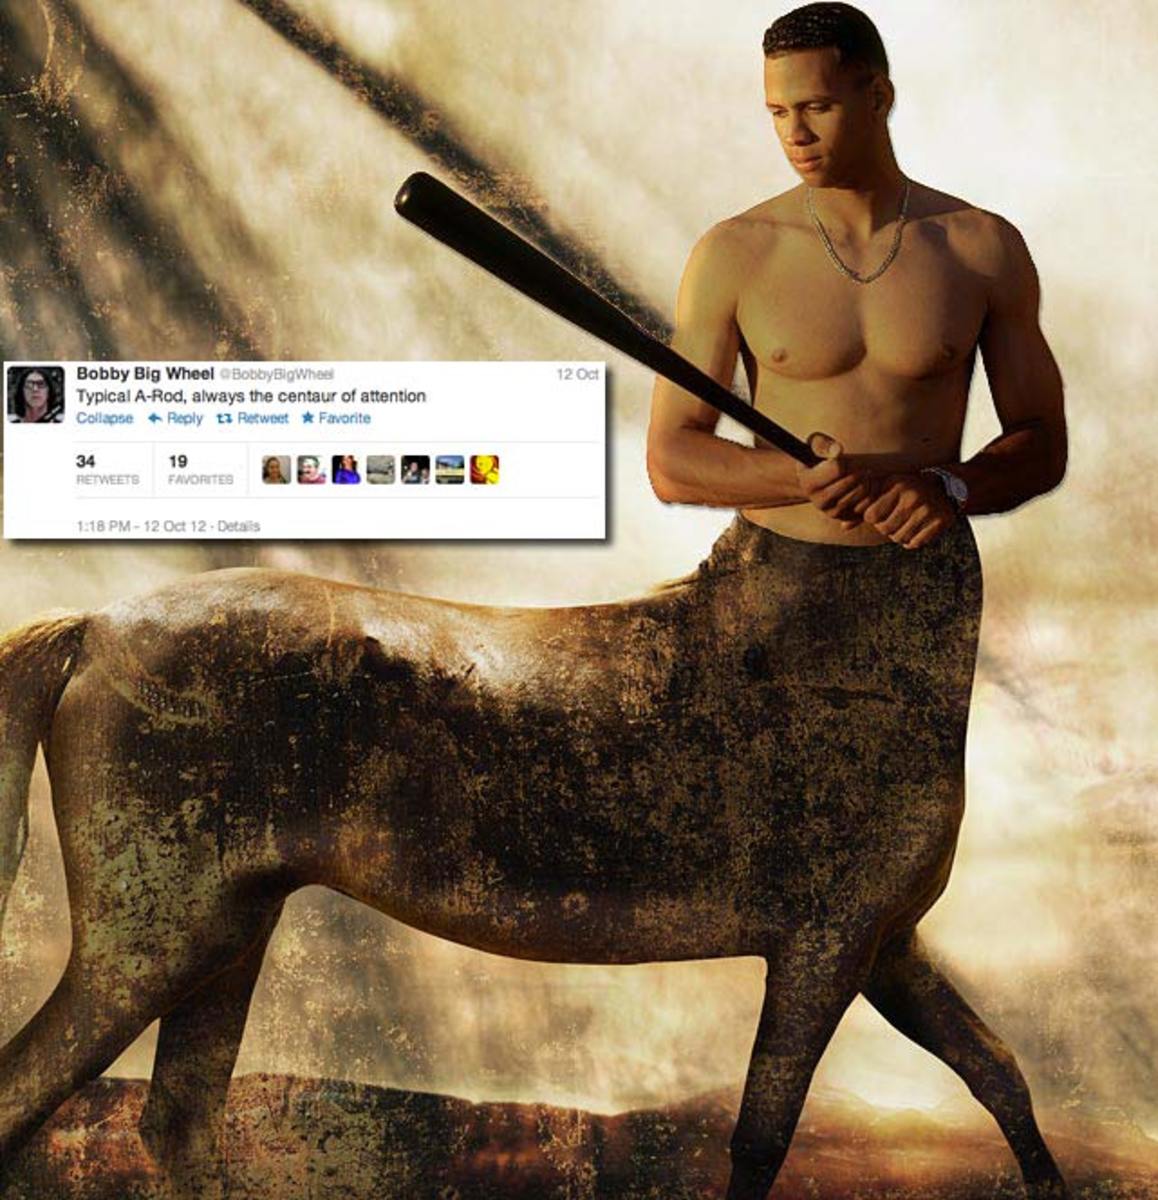 a-rod-centaur-tweet.jpg